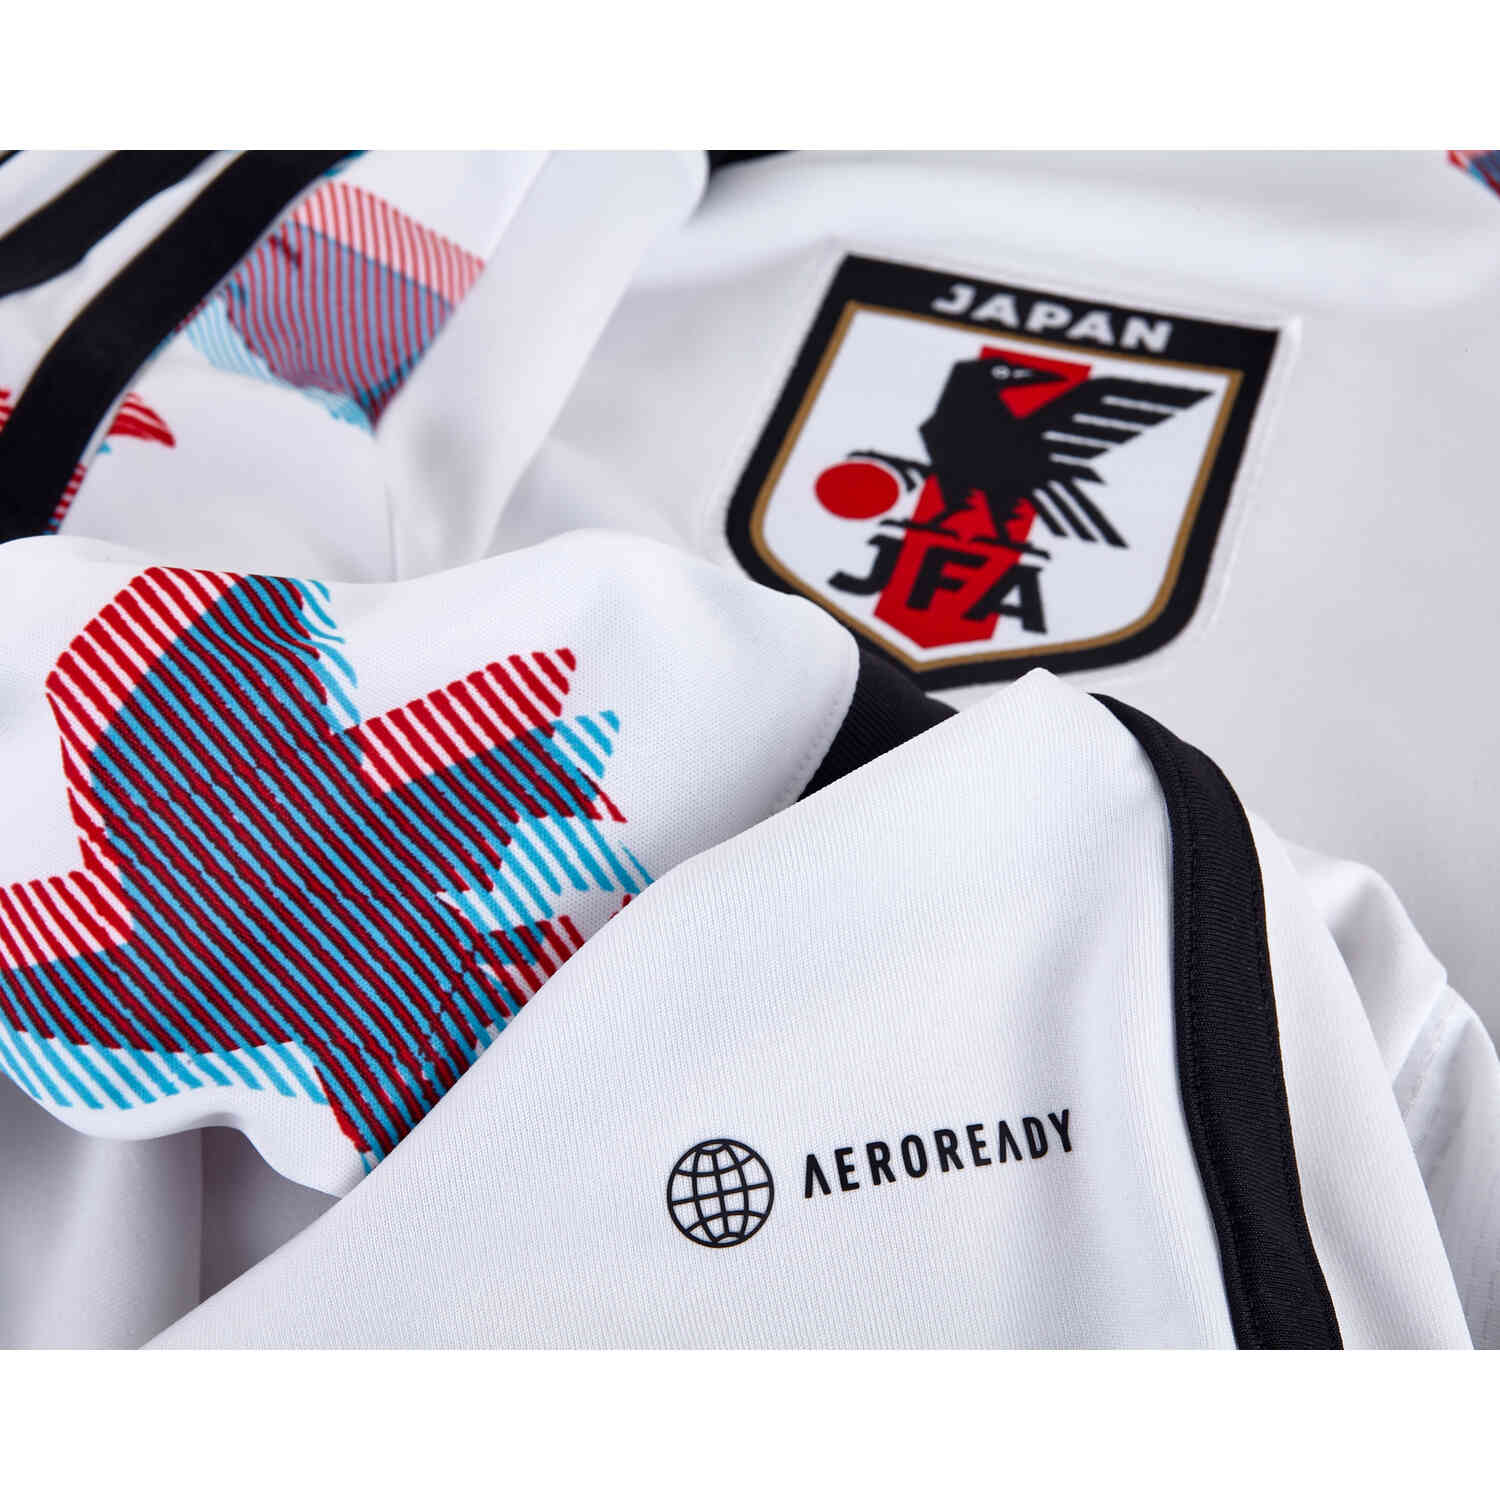 No More Adidas - Jordan Slovenia 2022 Home & Away Kits Released